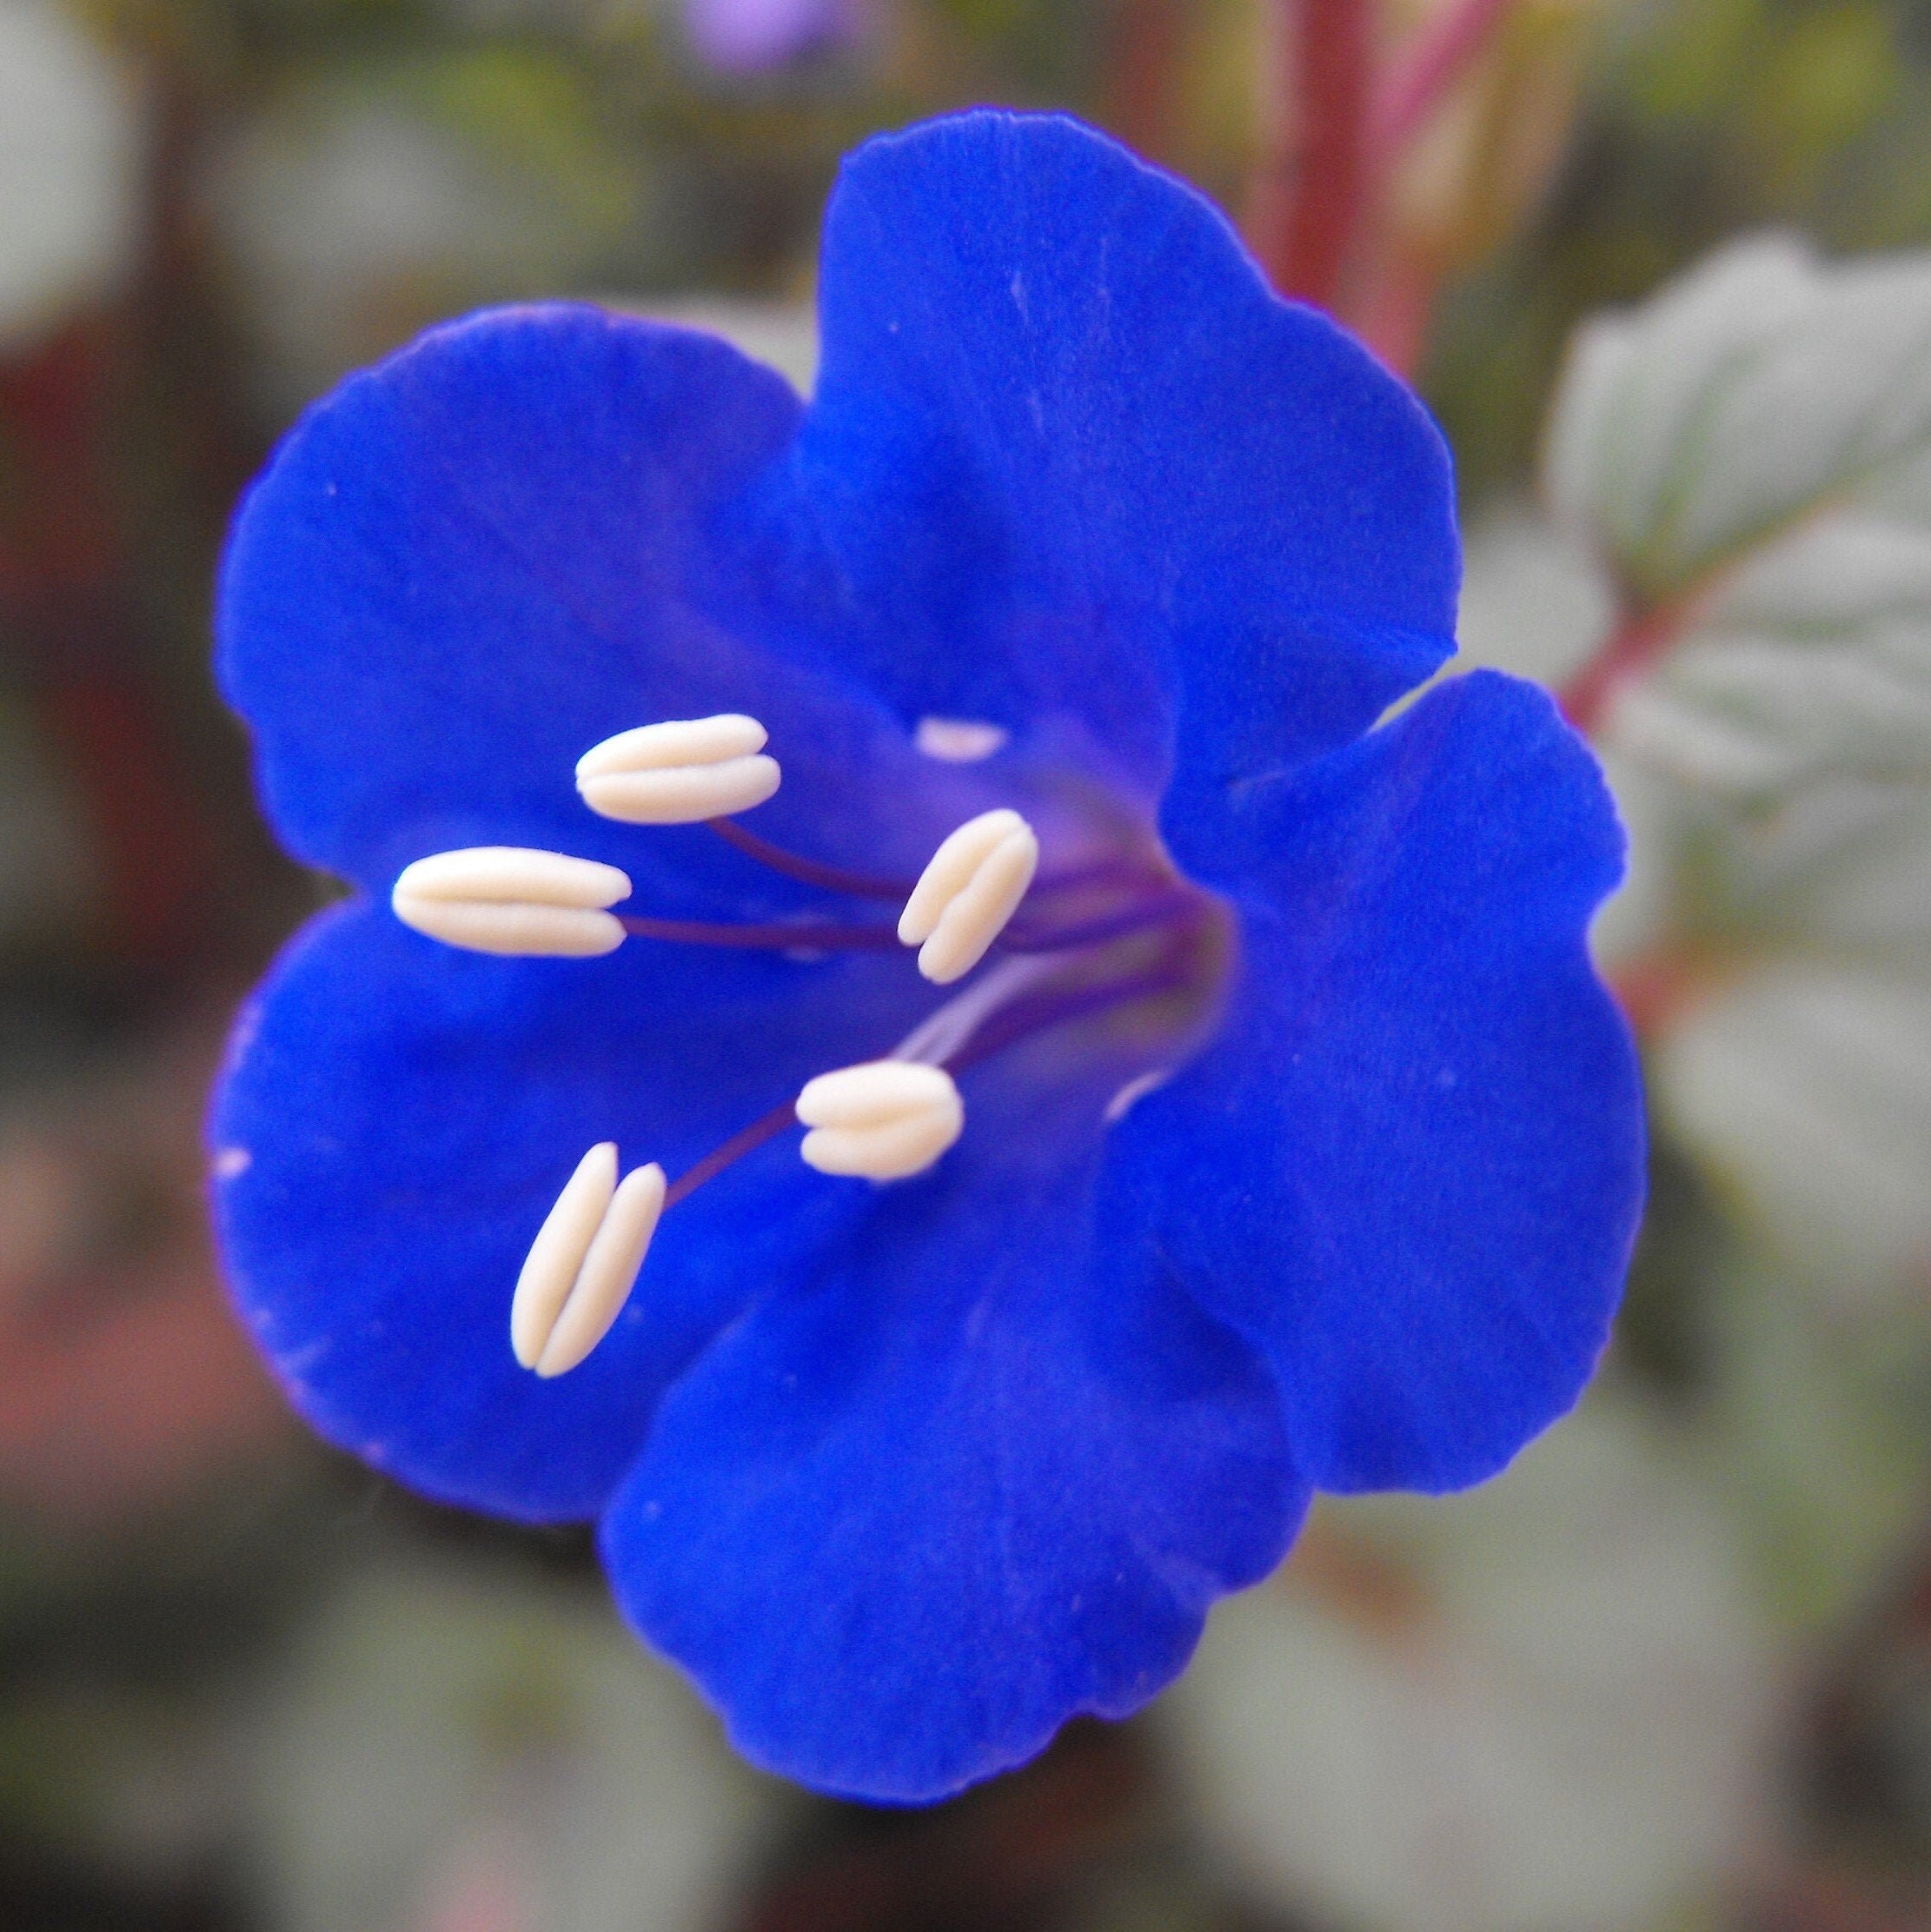 Virginia Bluebells For Sale Online  Buy 1 Get 1 Free – Garden Plants  Nursery